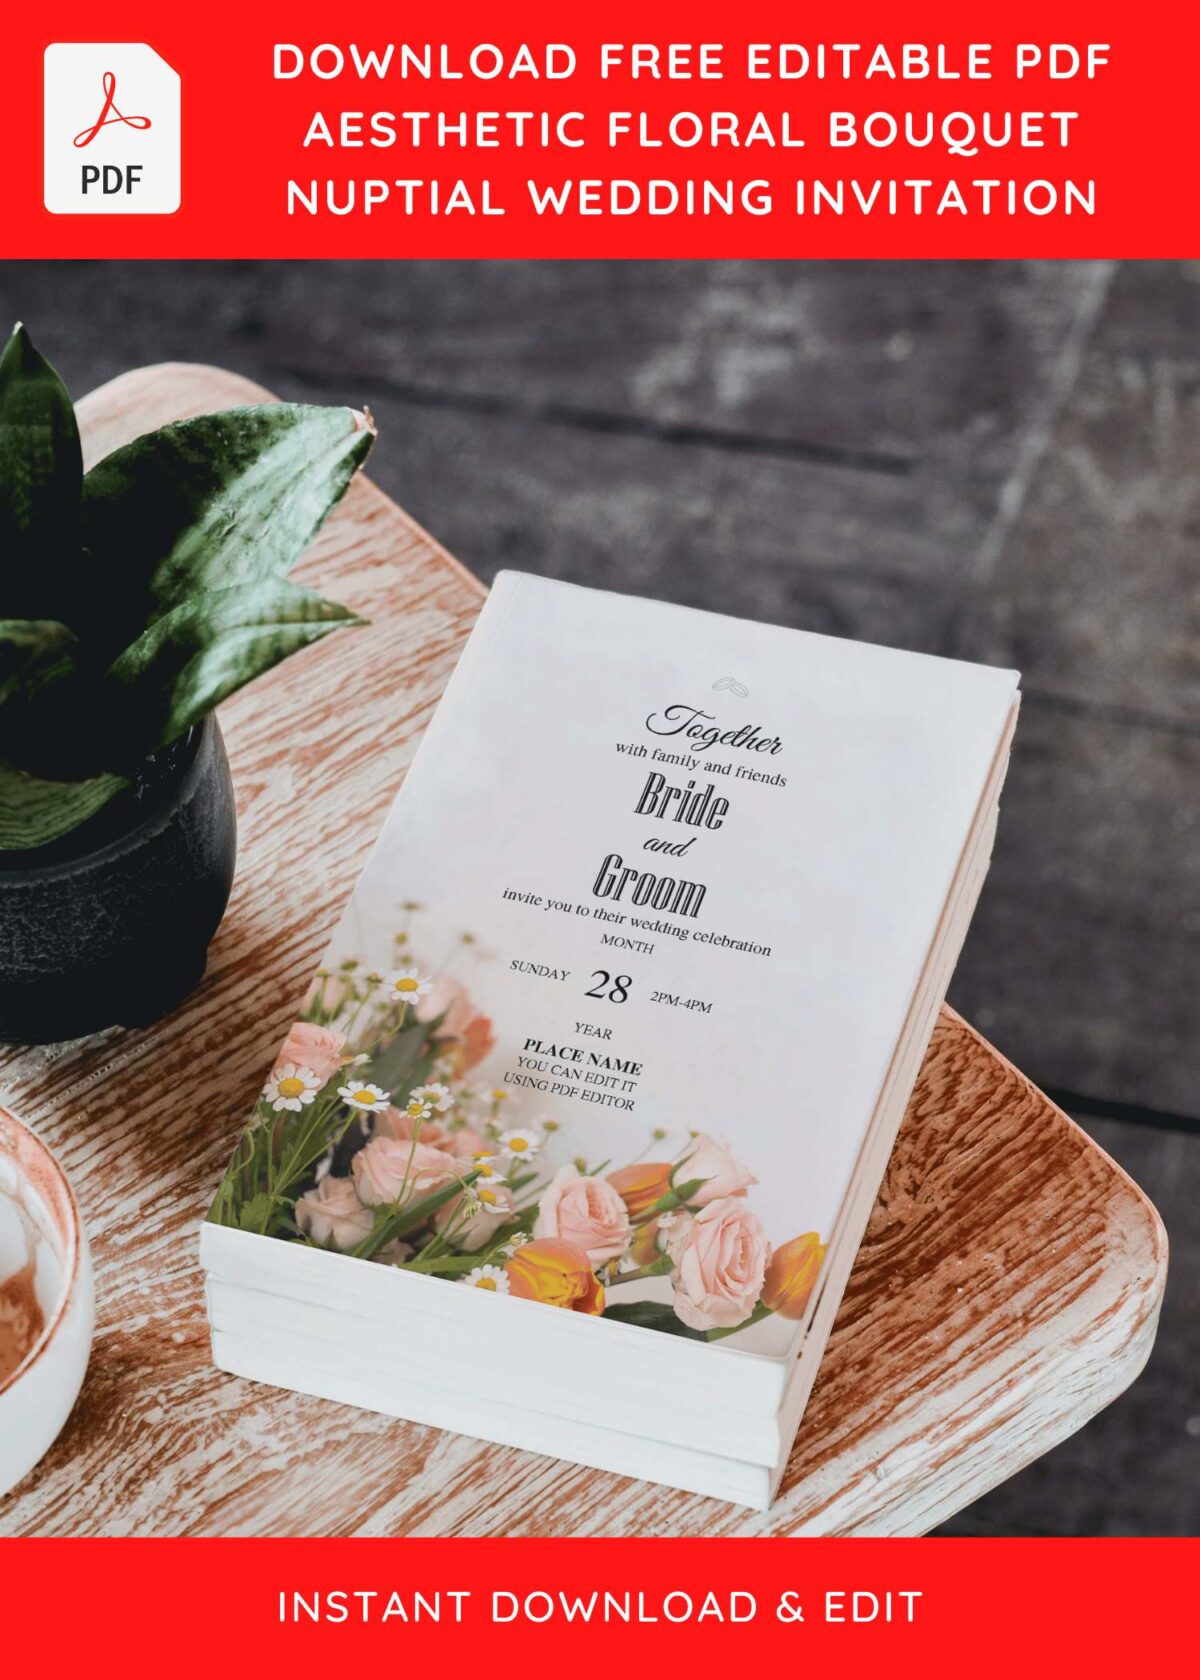 (Free Editable PDF) Pristine White Rose Wedding Invitation Templates with enchanting watercolor flowers